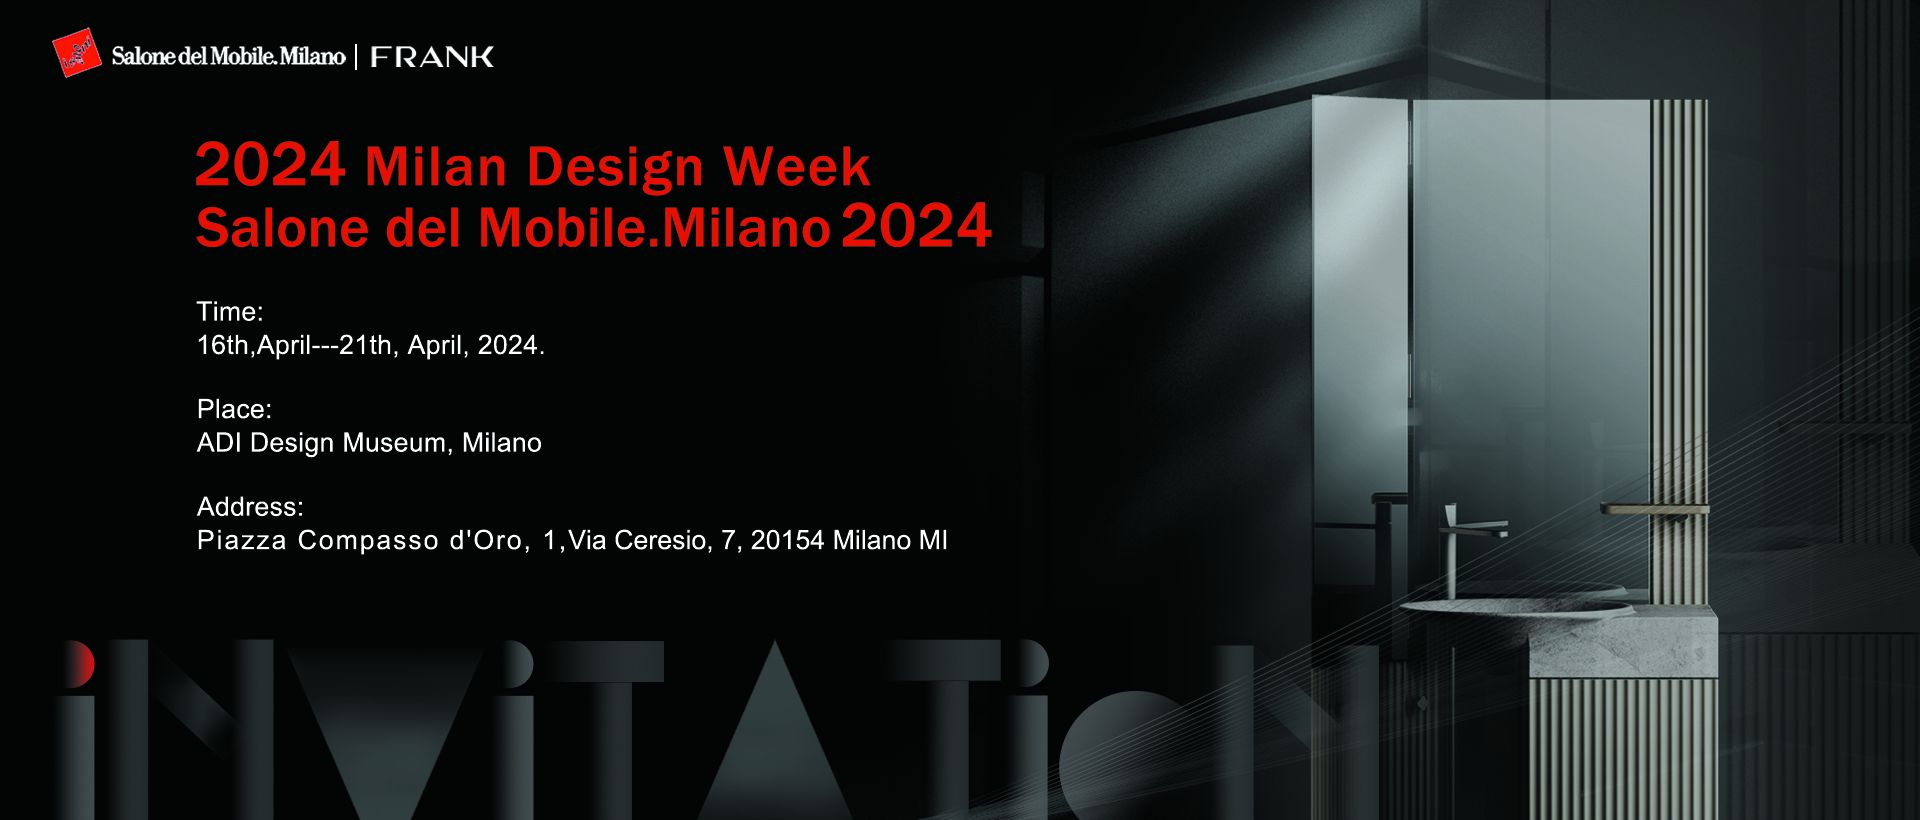 FRANK In 2024 Milan Design Week